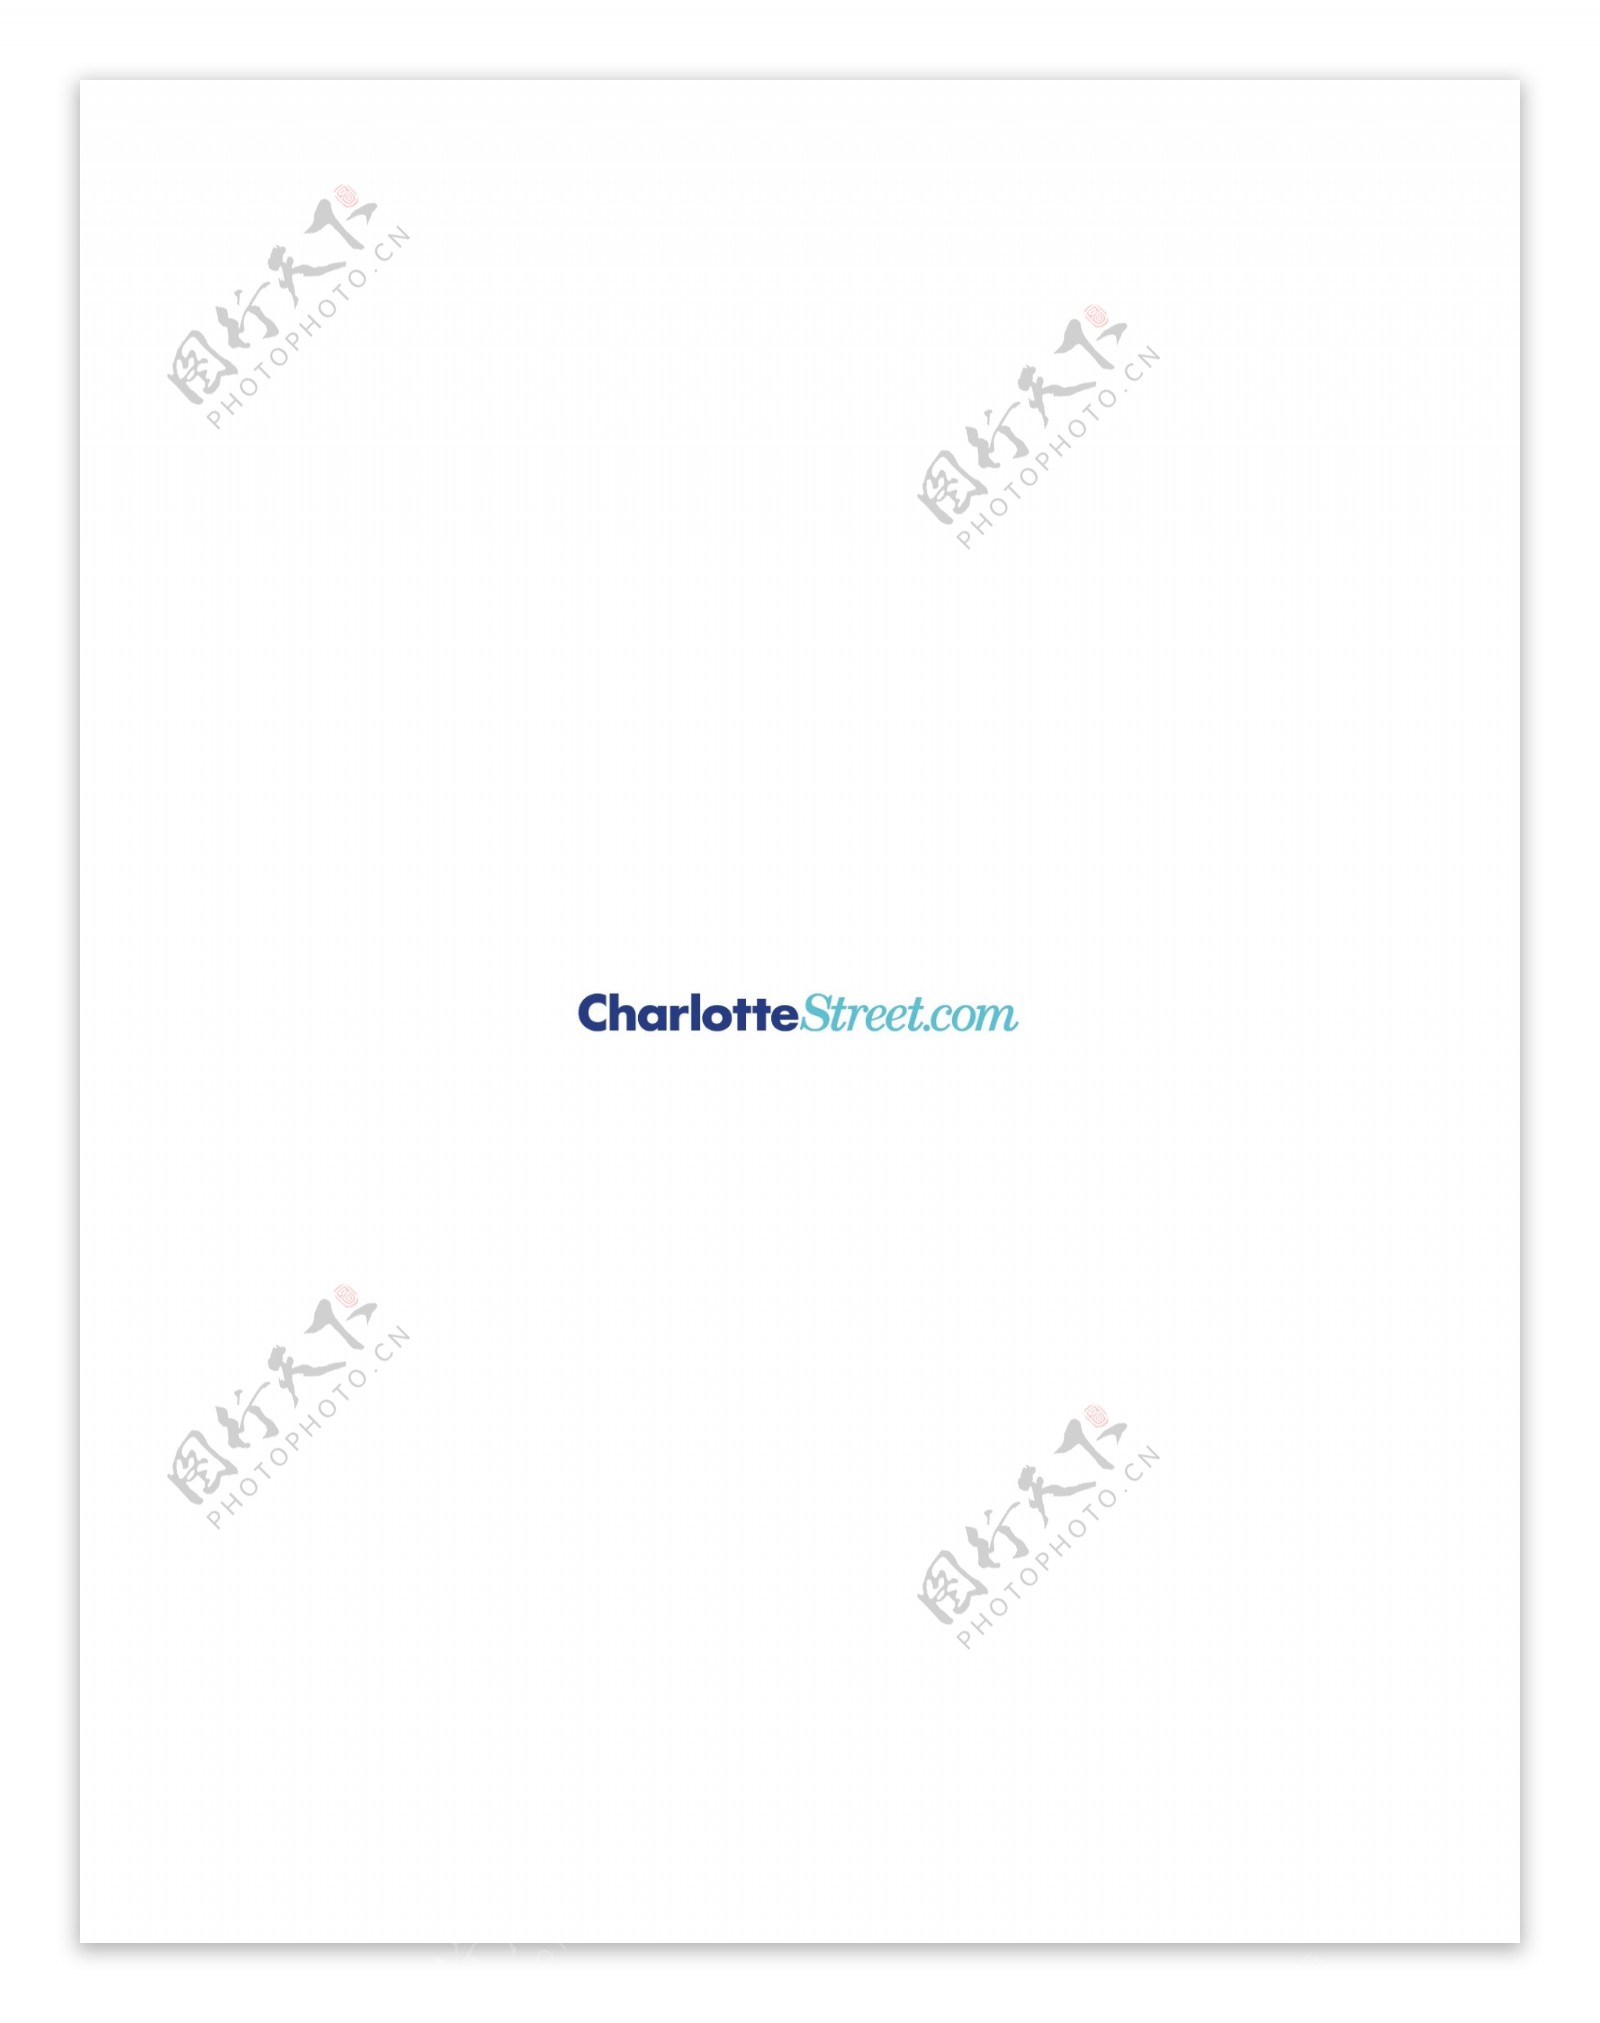 CharlotteStreetlogo设计欣赏国外知名公司标志范例CharlotteStreet下载标志设计欣赏